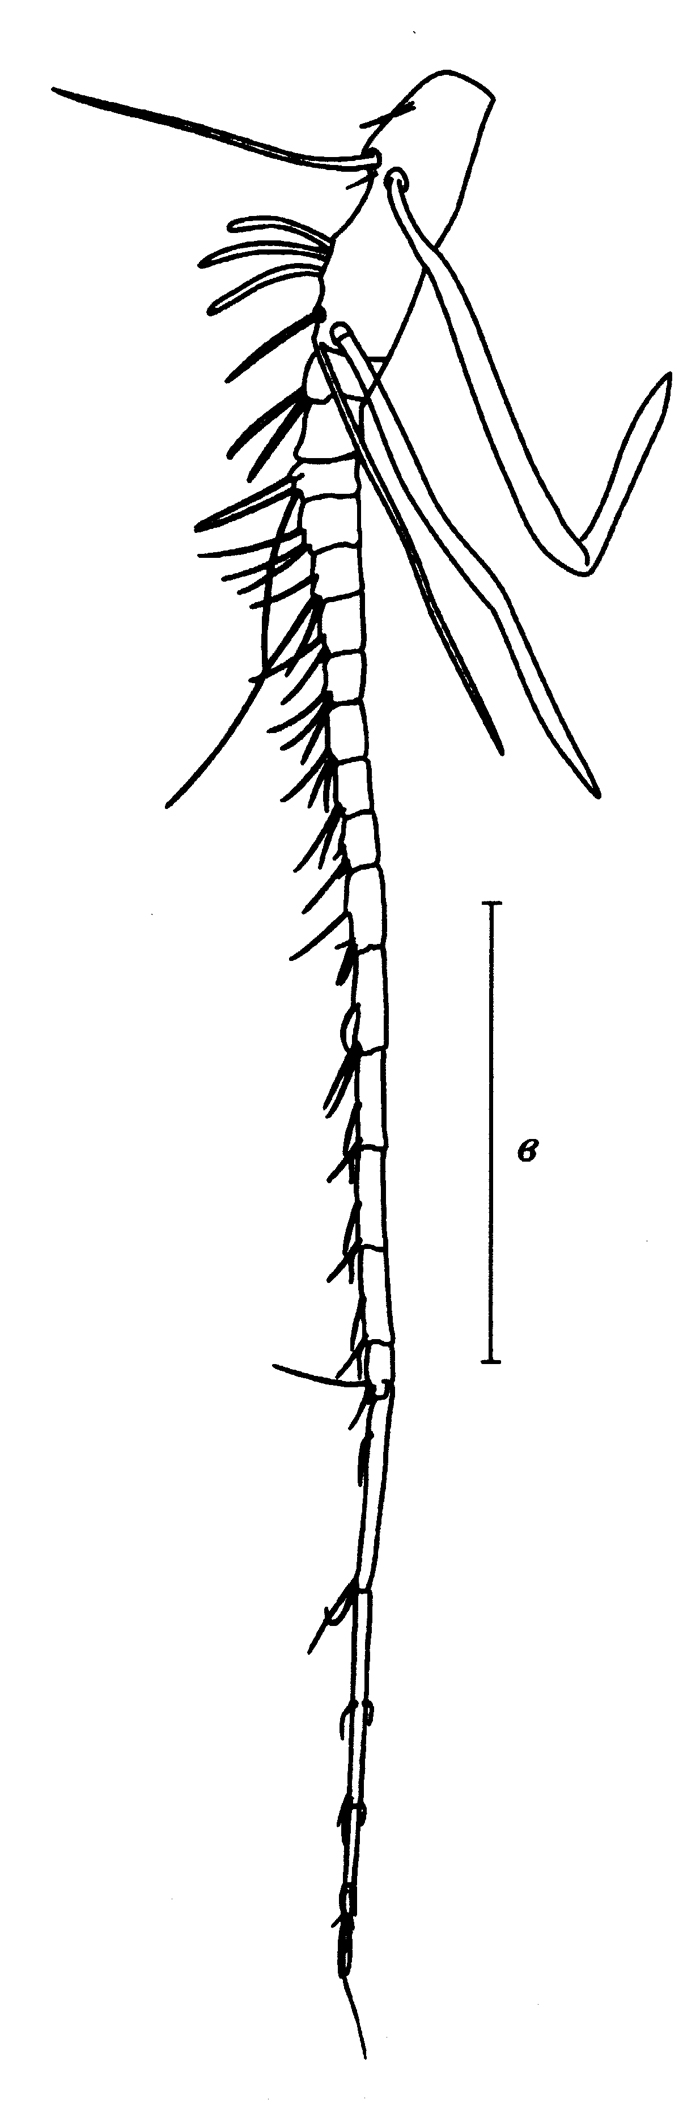 Species Heterorhabdus tanneri - Plate 17 of morphological figures